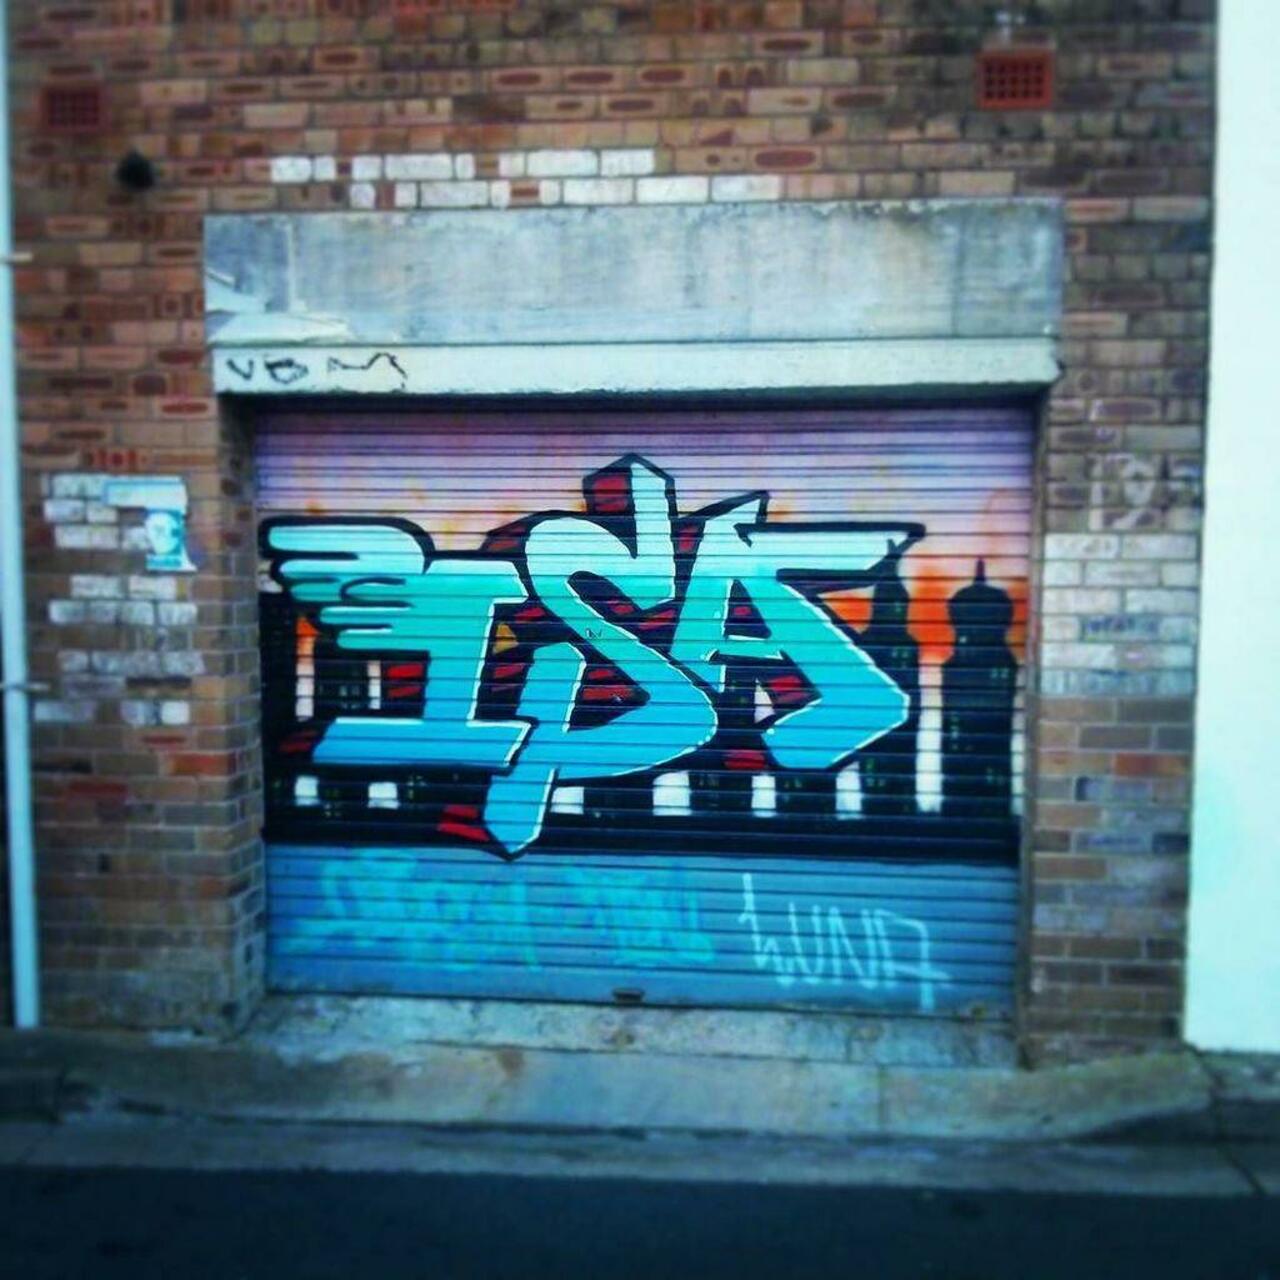 Isa #sydney #ifttt #sydneygraffiti #doorswithtags #newtown #rsa_graffiti #arteurbano #streetart #graffiti #graffiso http://t.co/rwokHKDZES